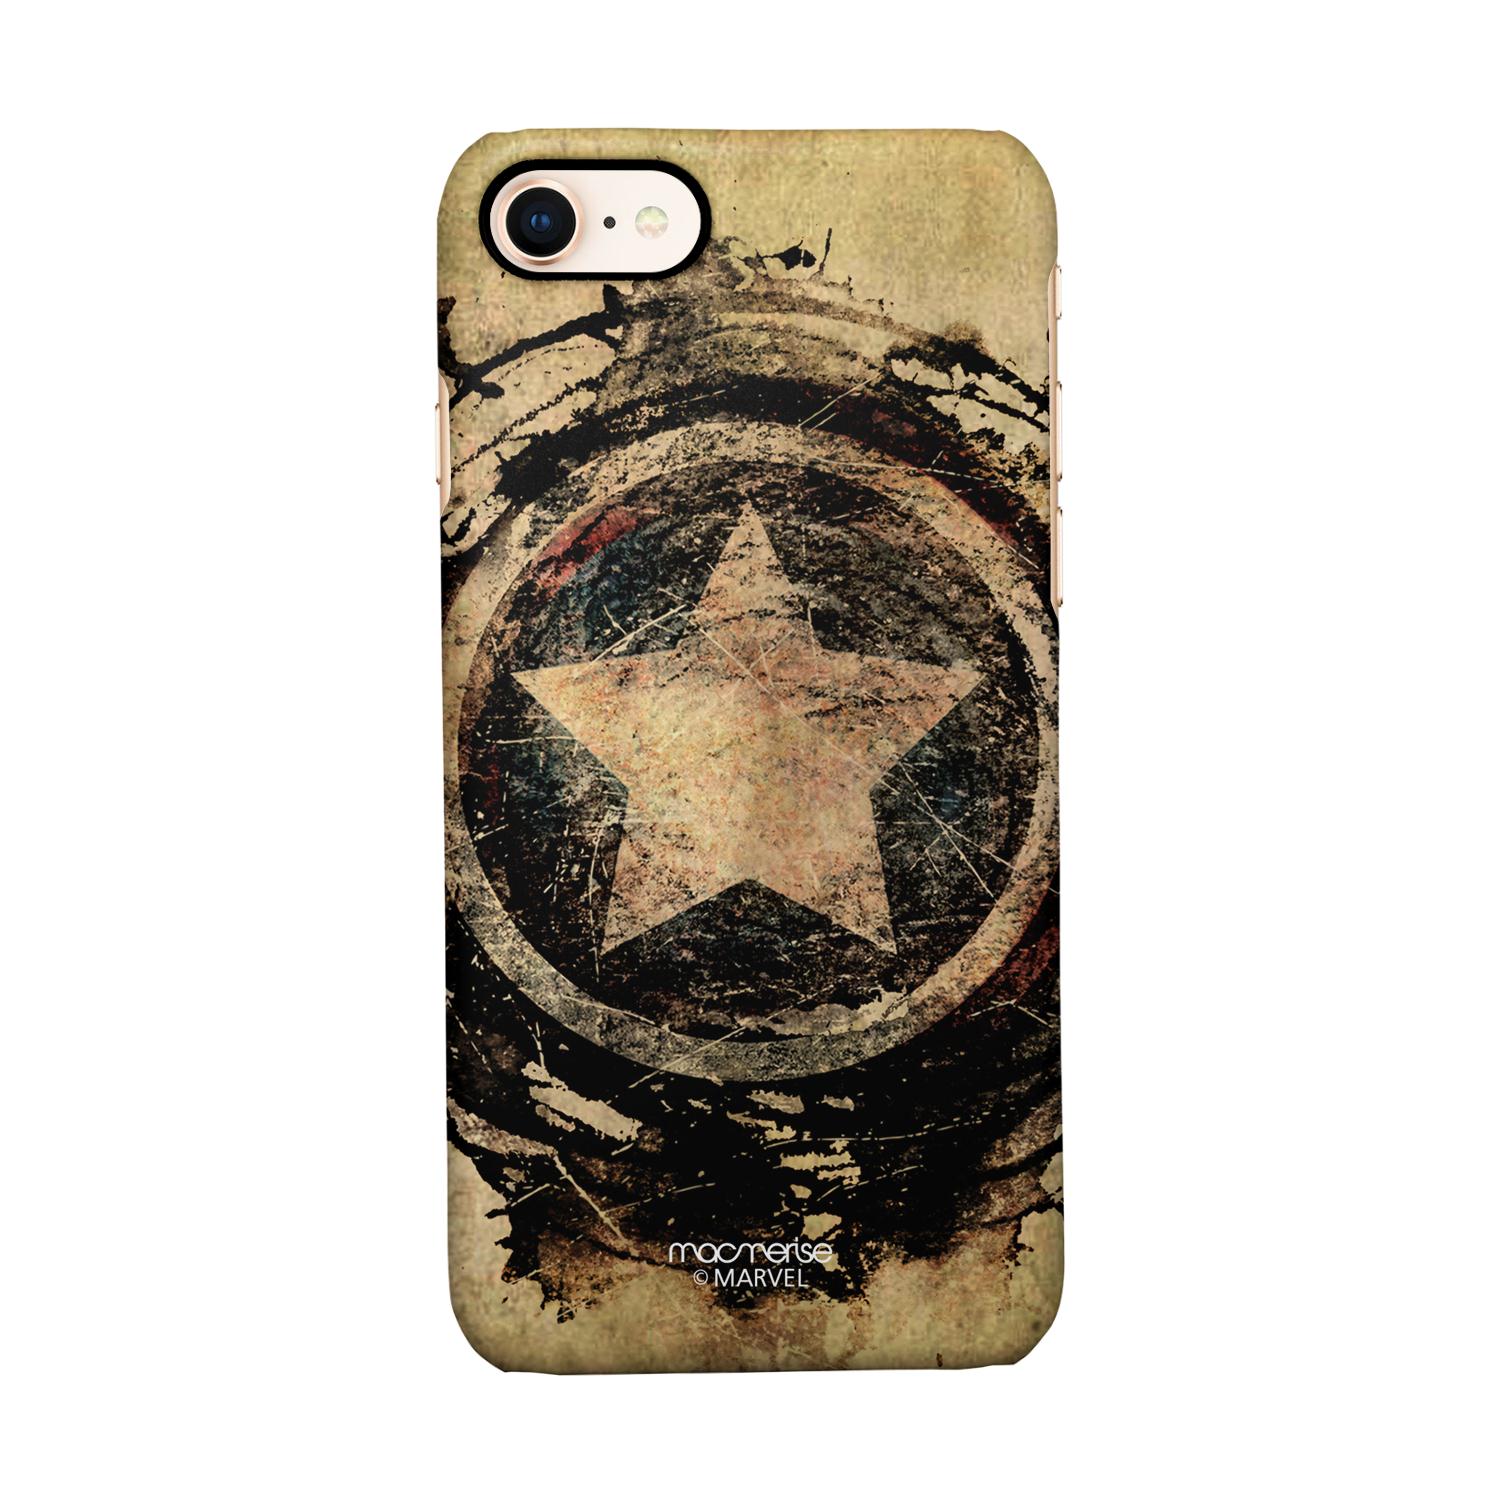 Buy Symbolic Captain Shield - Sleek Phone Case for iPhone 7 Online